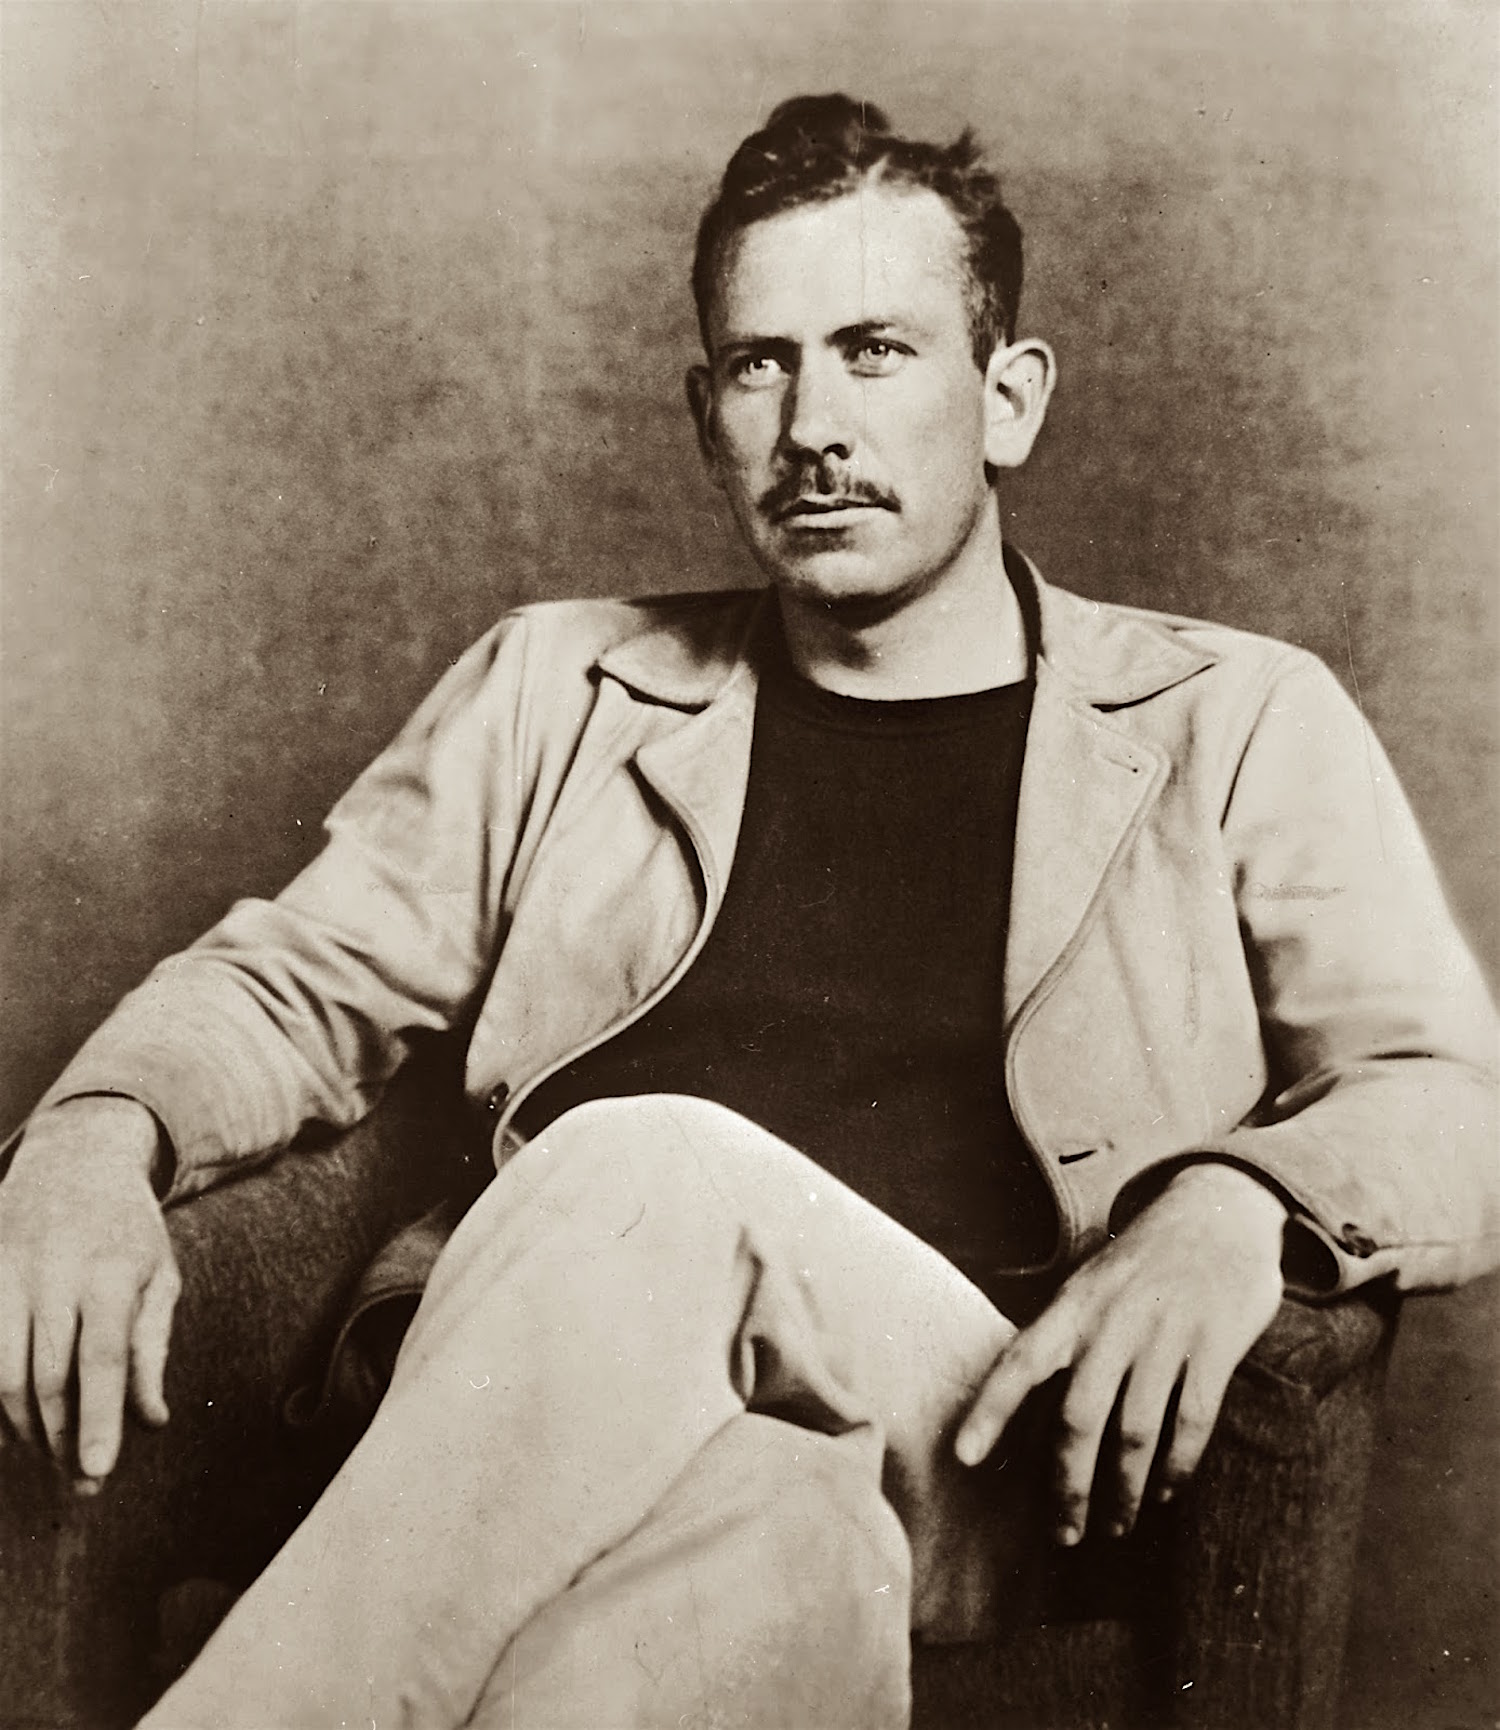 John Steinbeck, writer